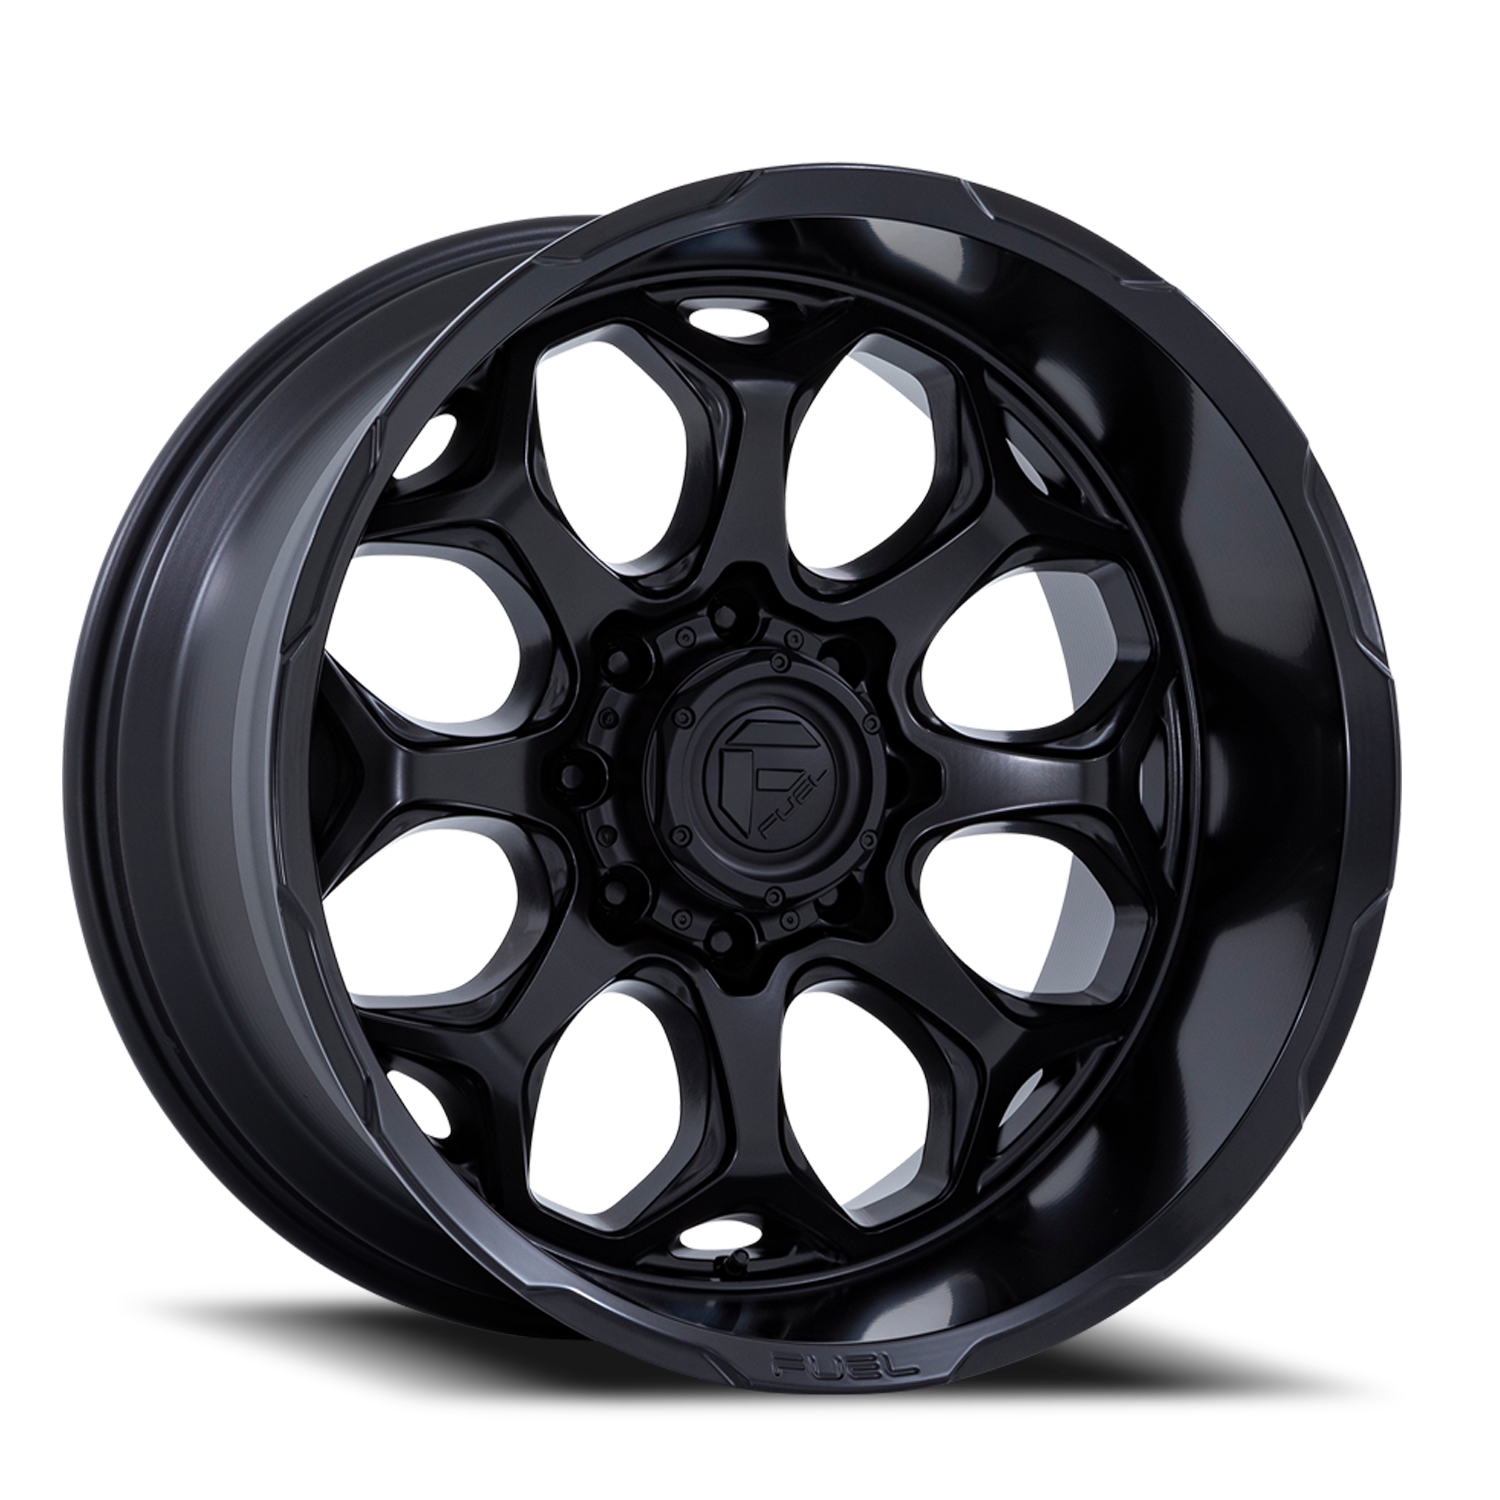 Aluminum Wheels 22X10 Scepter FC862 MX 6 On 135 Blackout 87.1 Bore -18 Offset Fuel Off Road Wheels